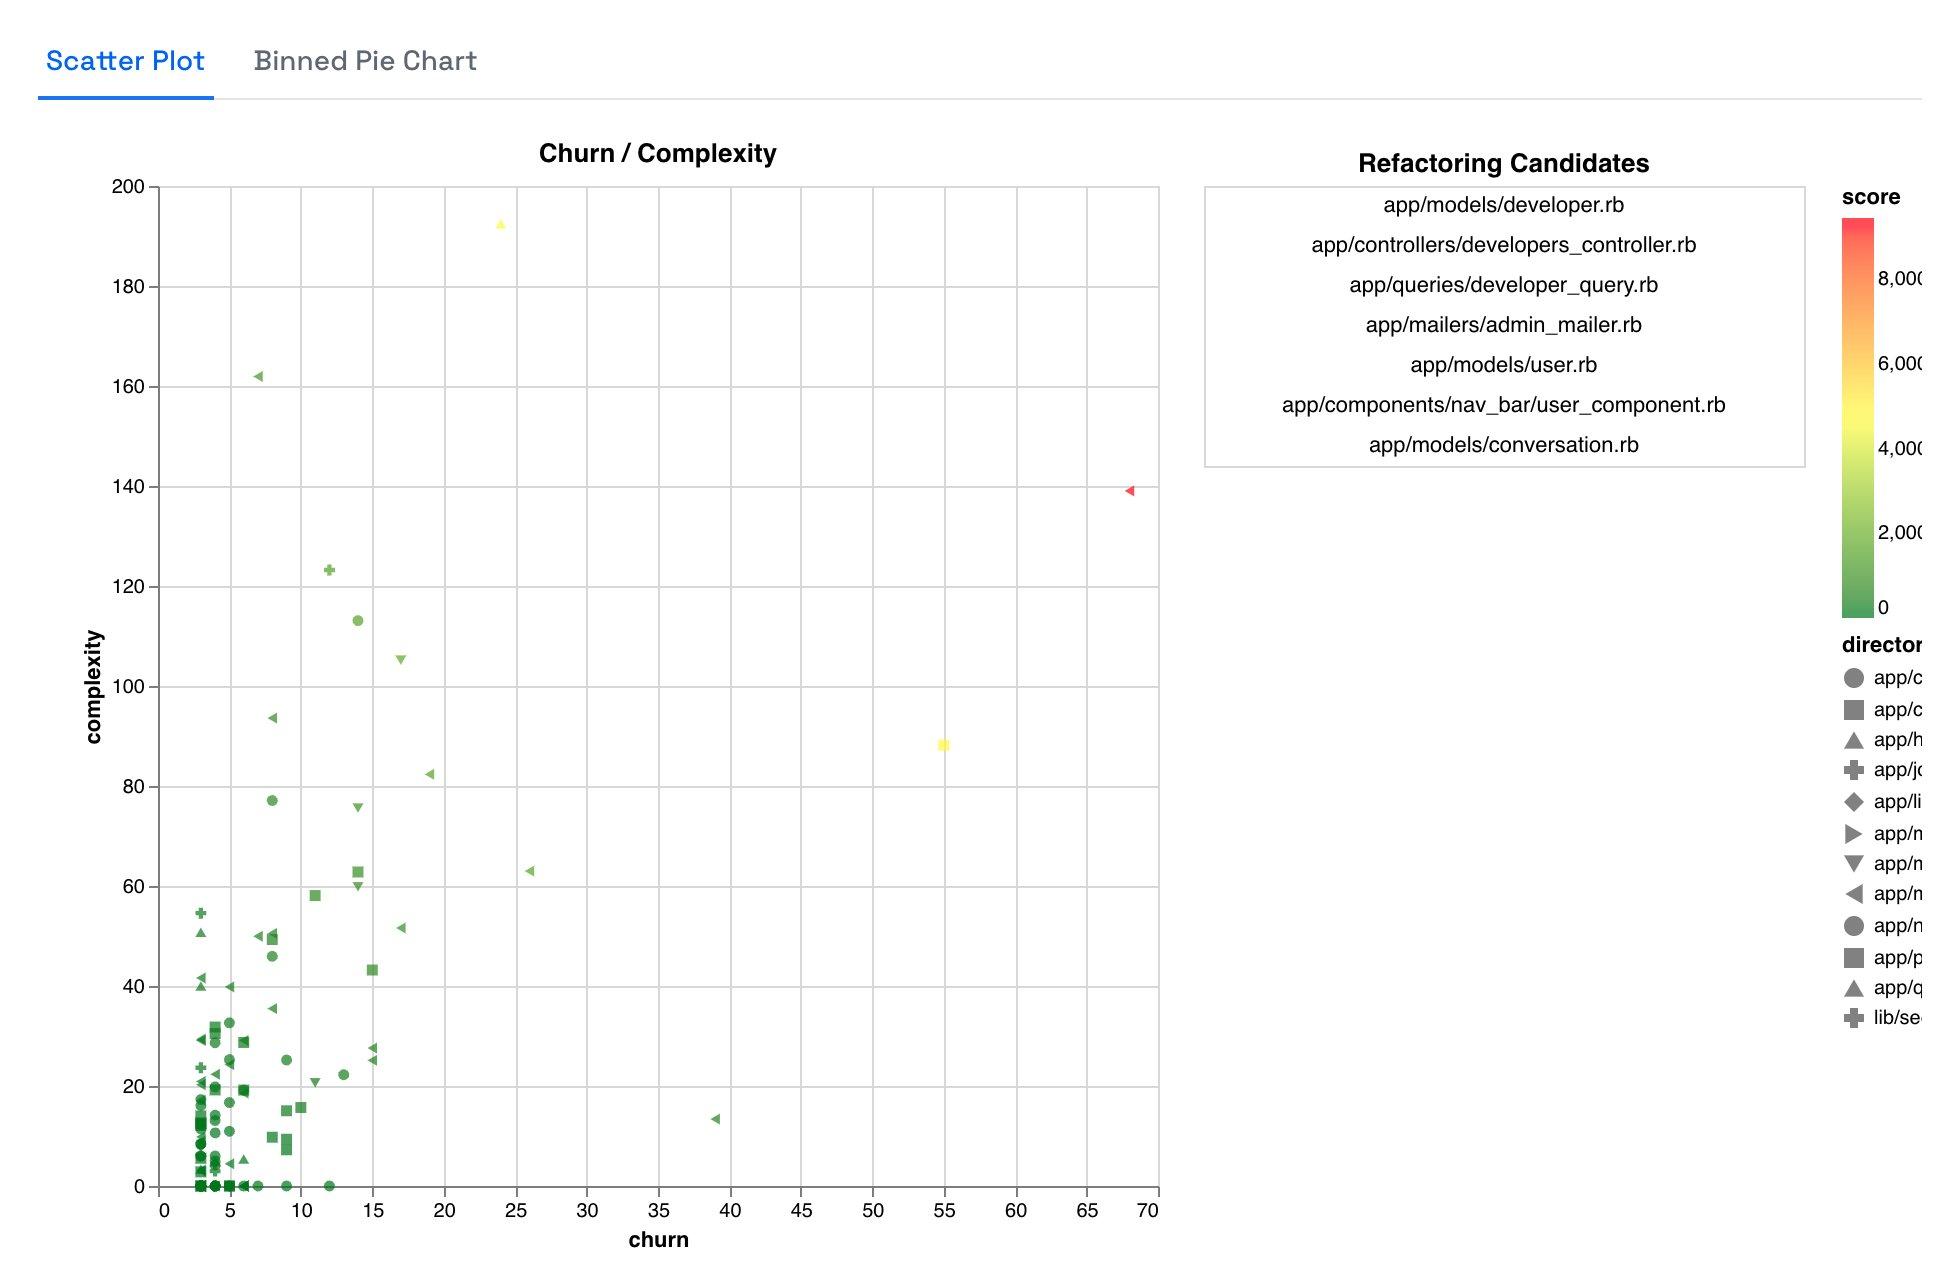 A Churn vs Complexity Chart